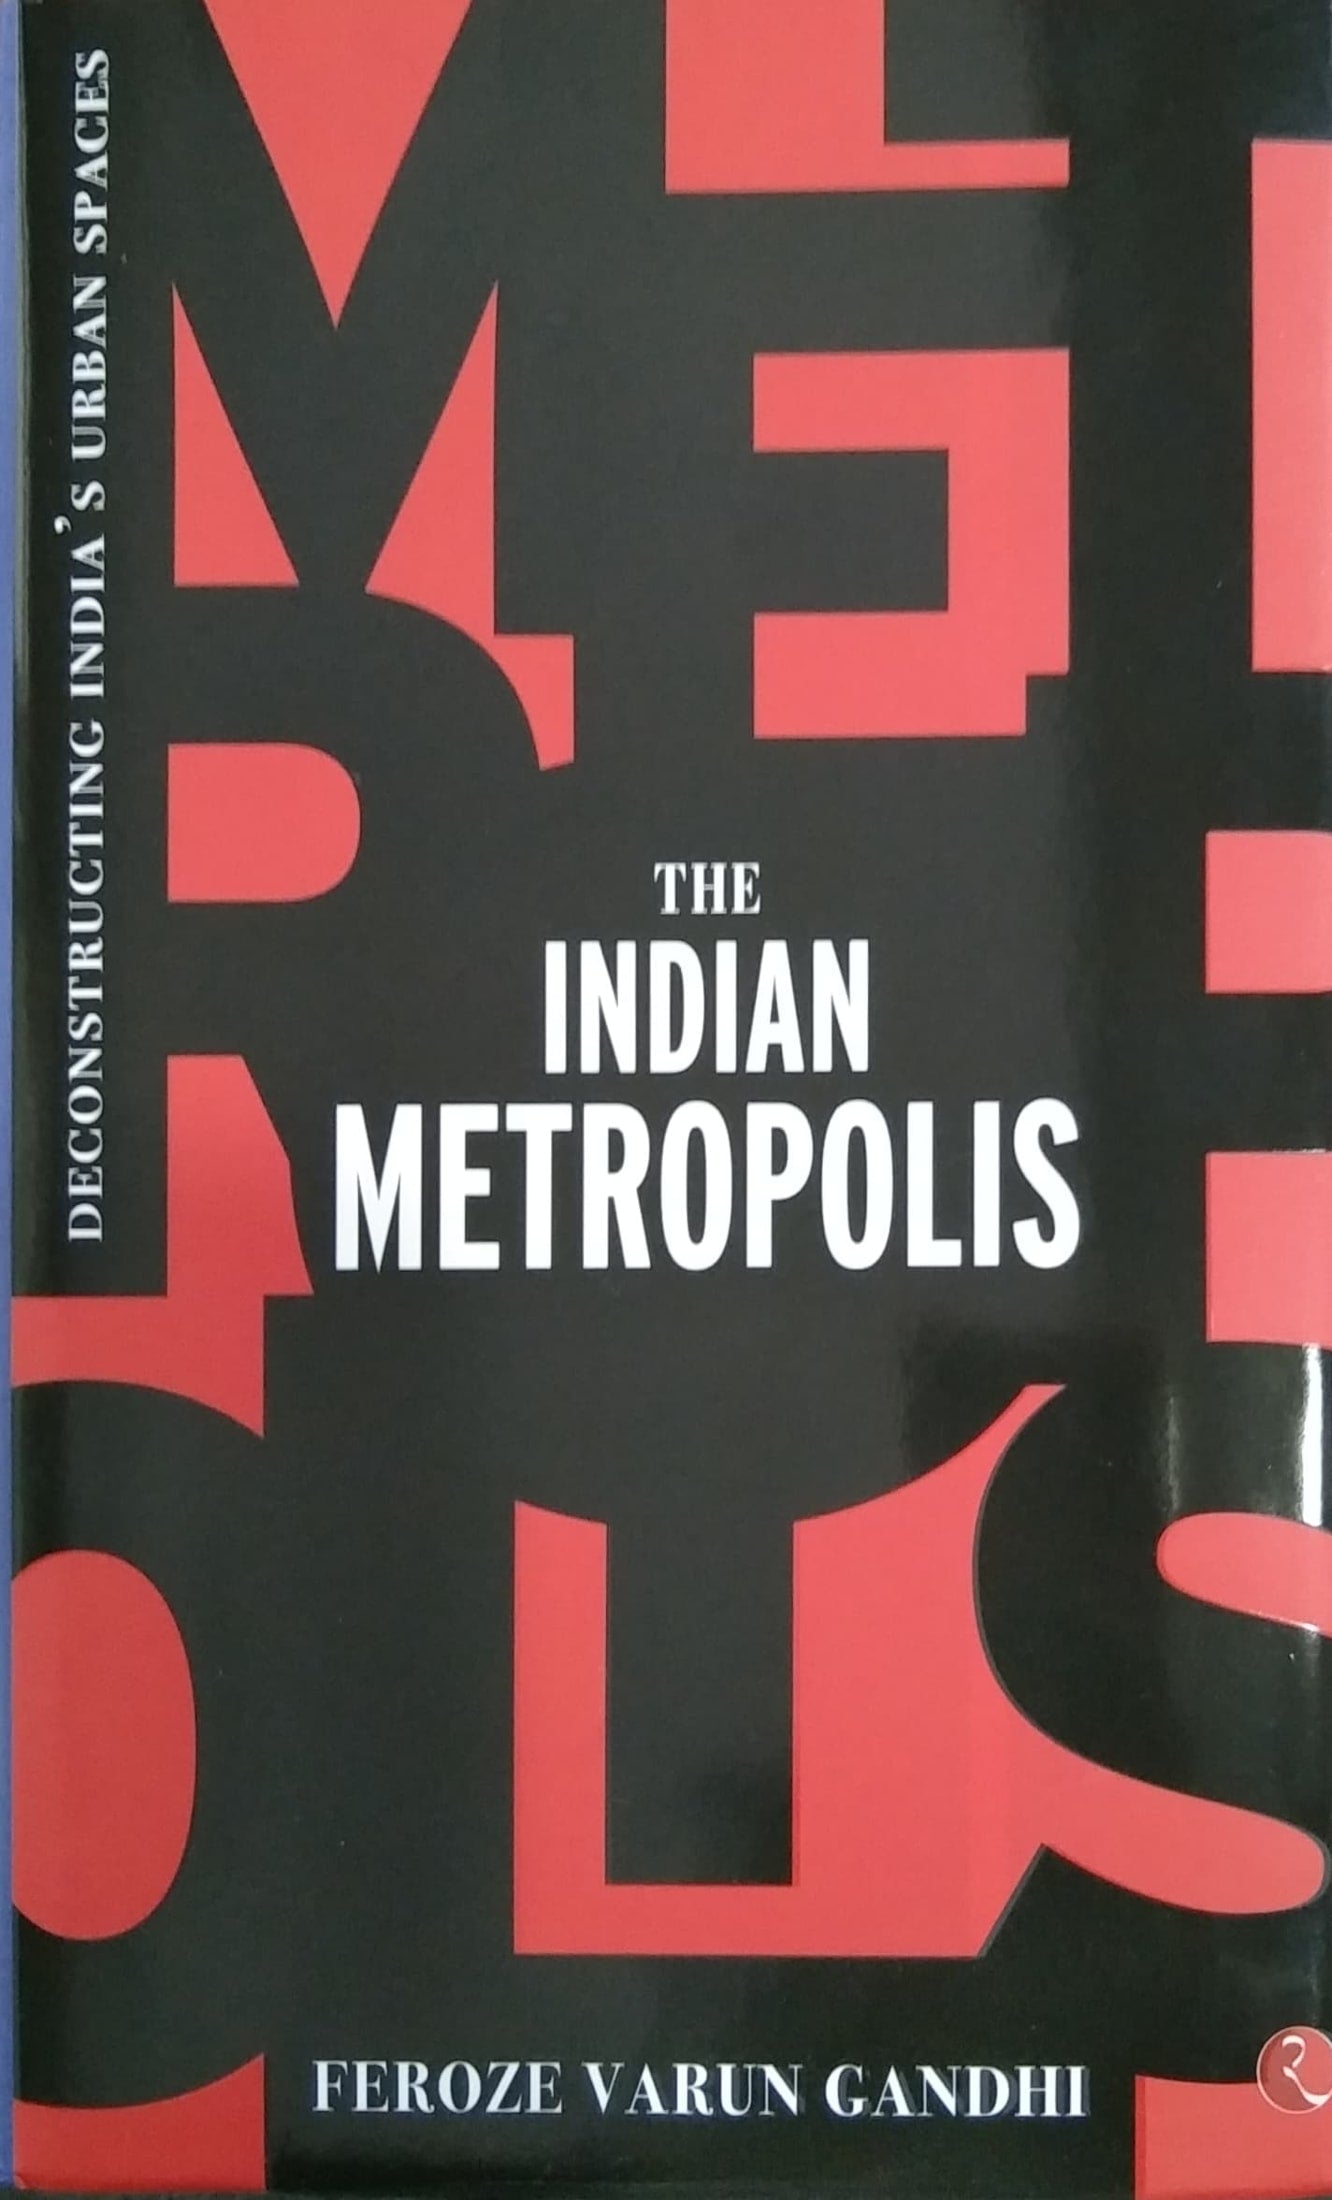 THE INDIAN METROPOLIS